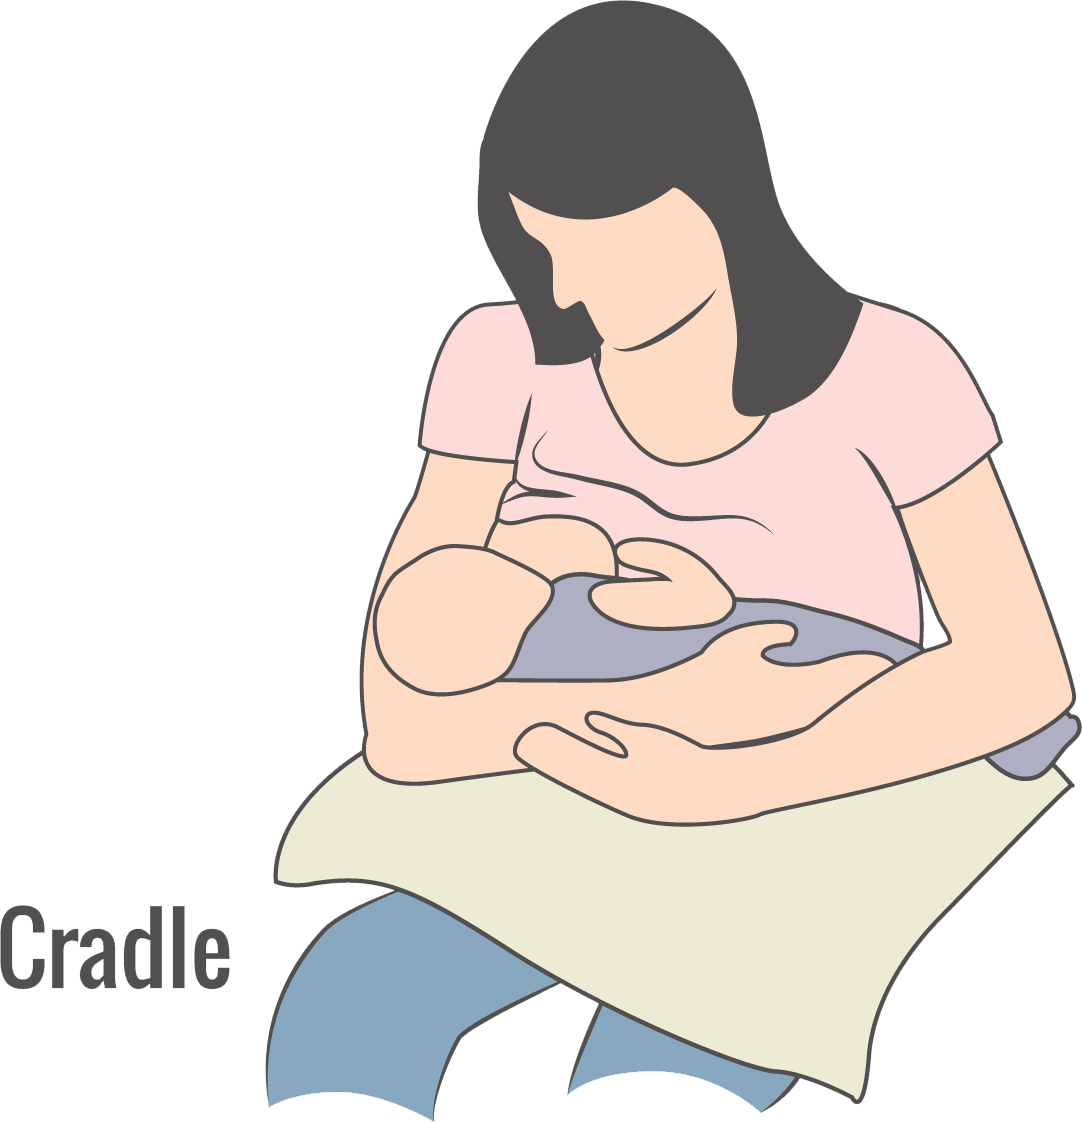 cradle breastfeeding